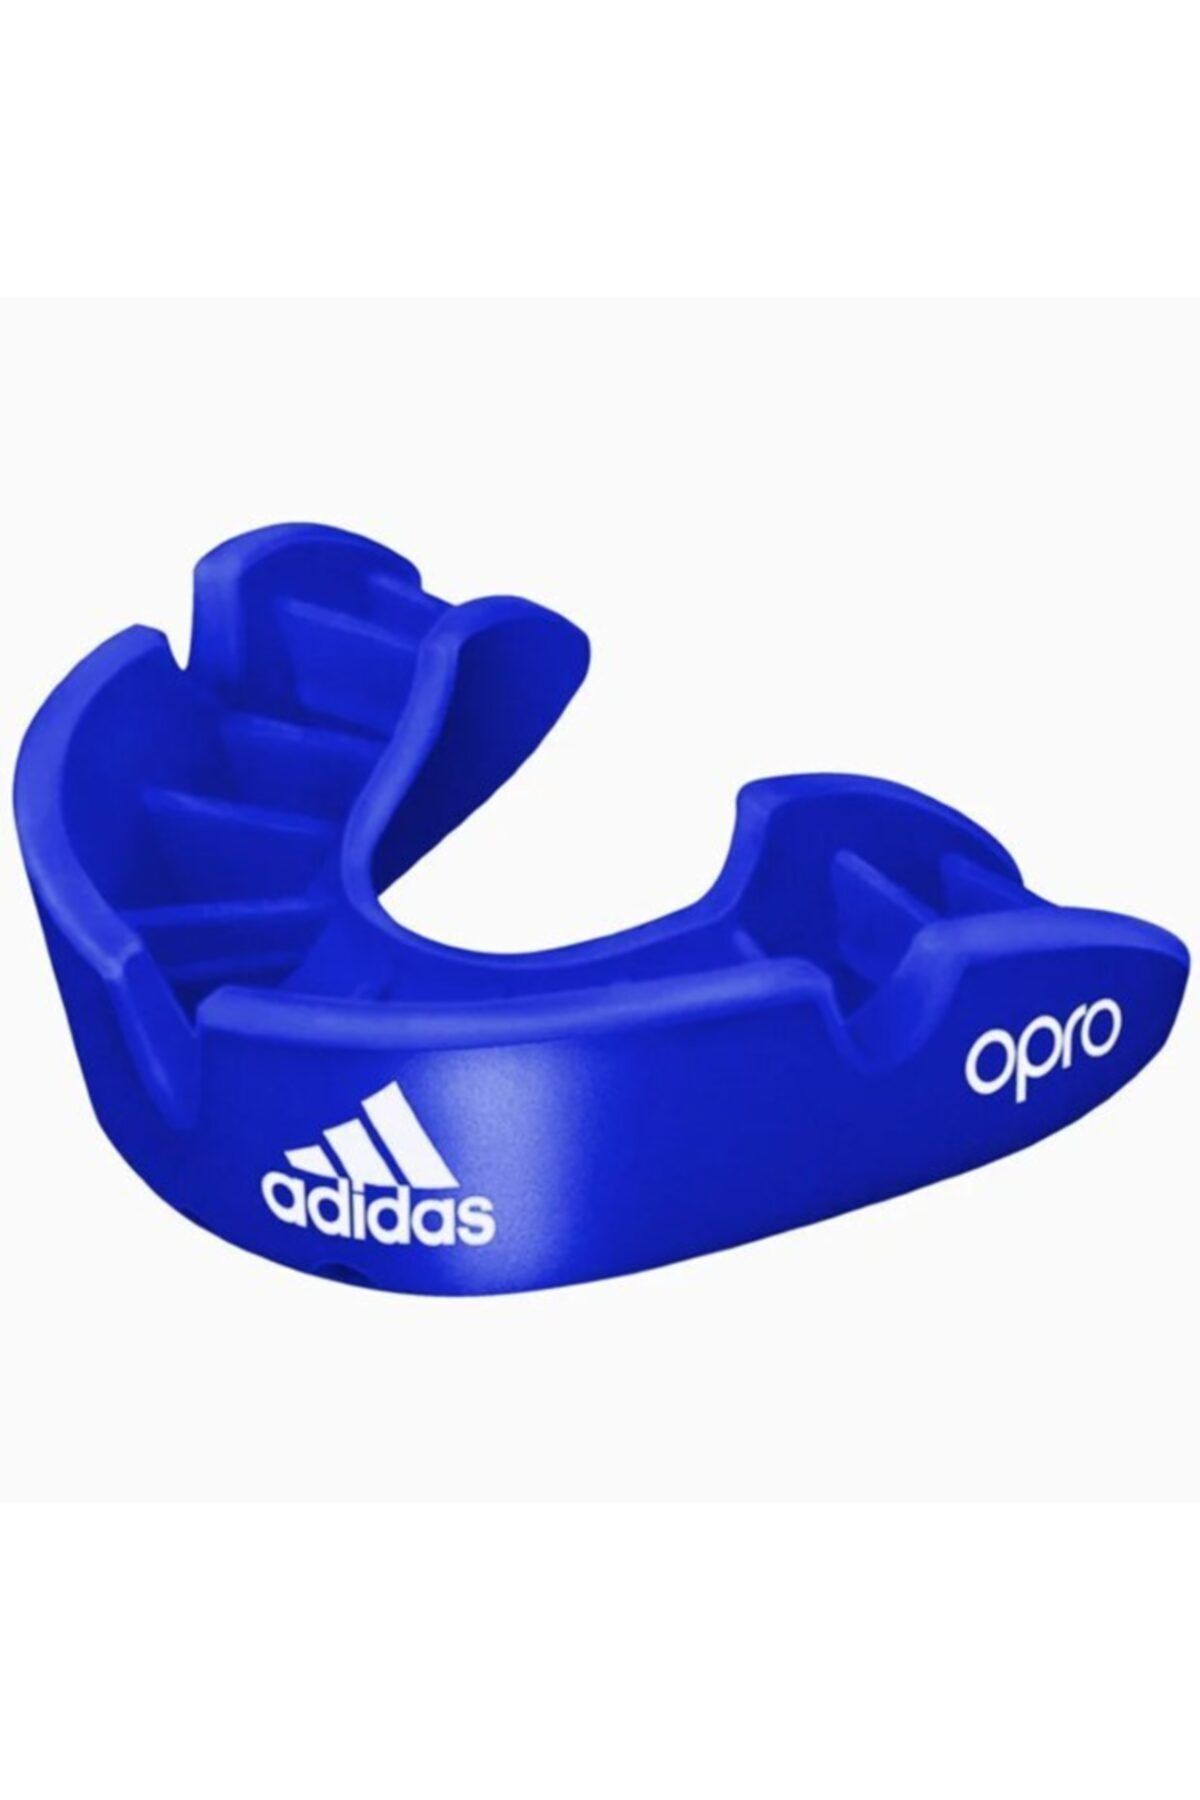 adidas Adıbp31 Bronz Dişlik Sporcu Dişliği Sporcu Ağızlığı Opro Mouthguard